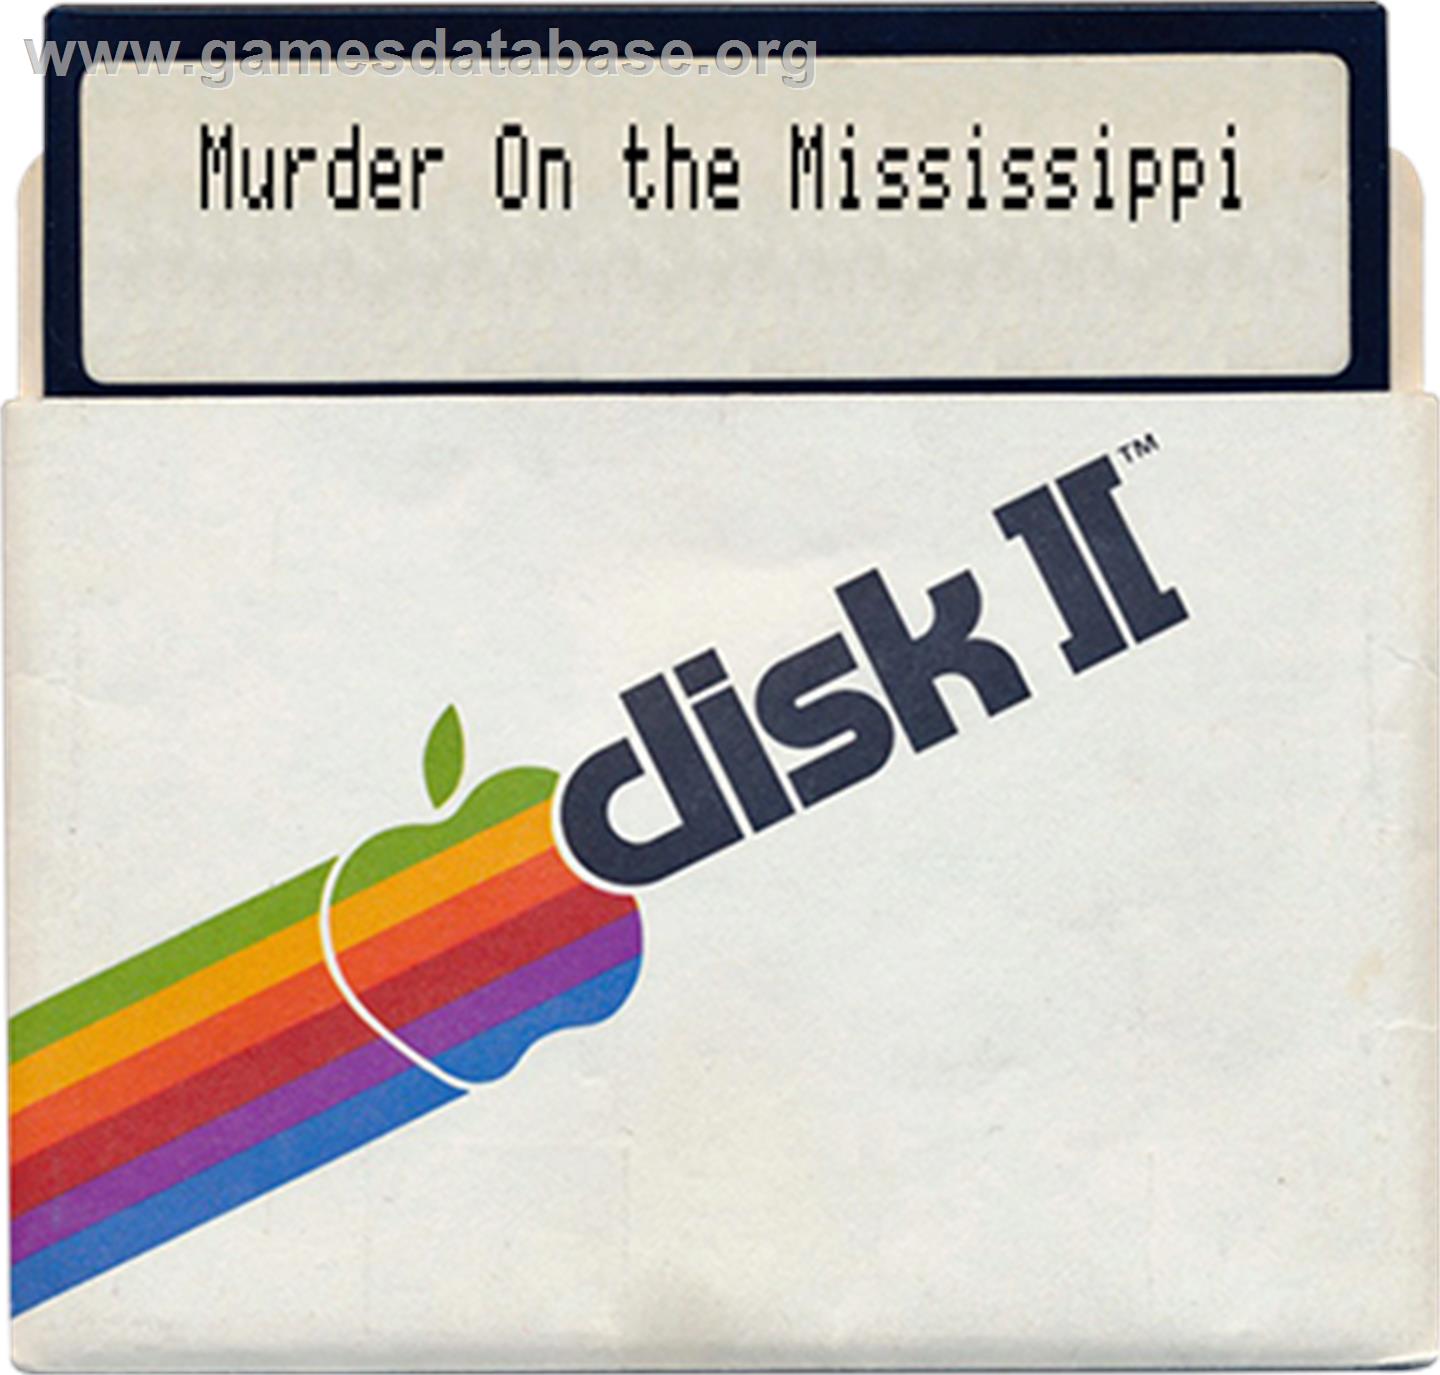 Murder on the Mississippi - Apple II - Artwork - Disc